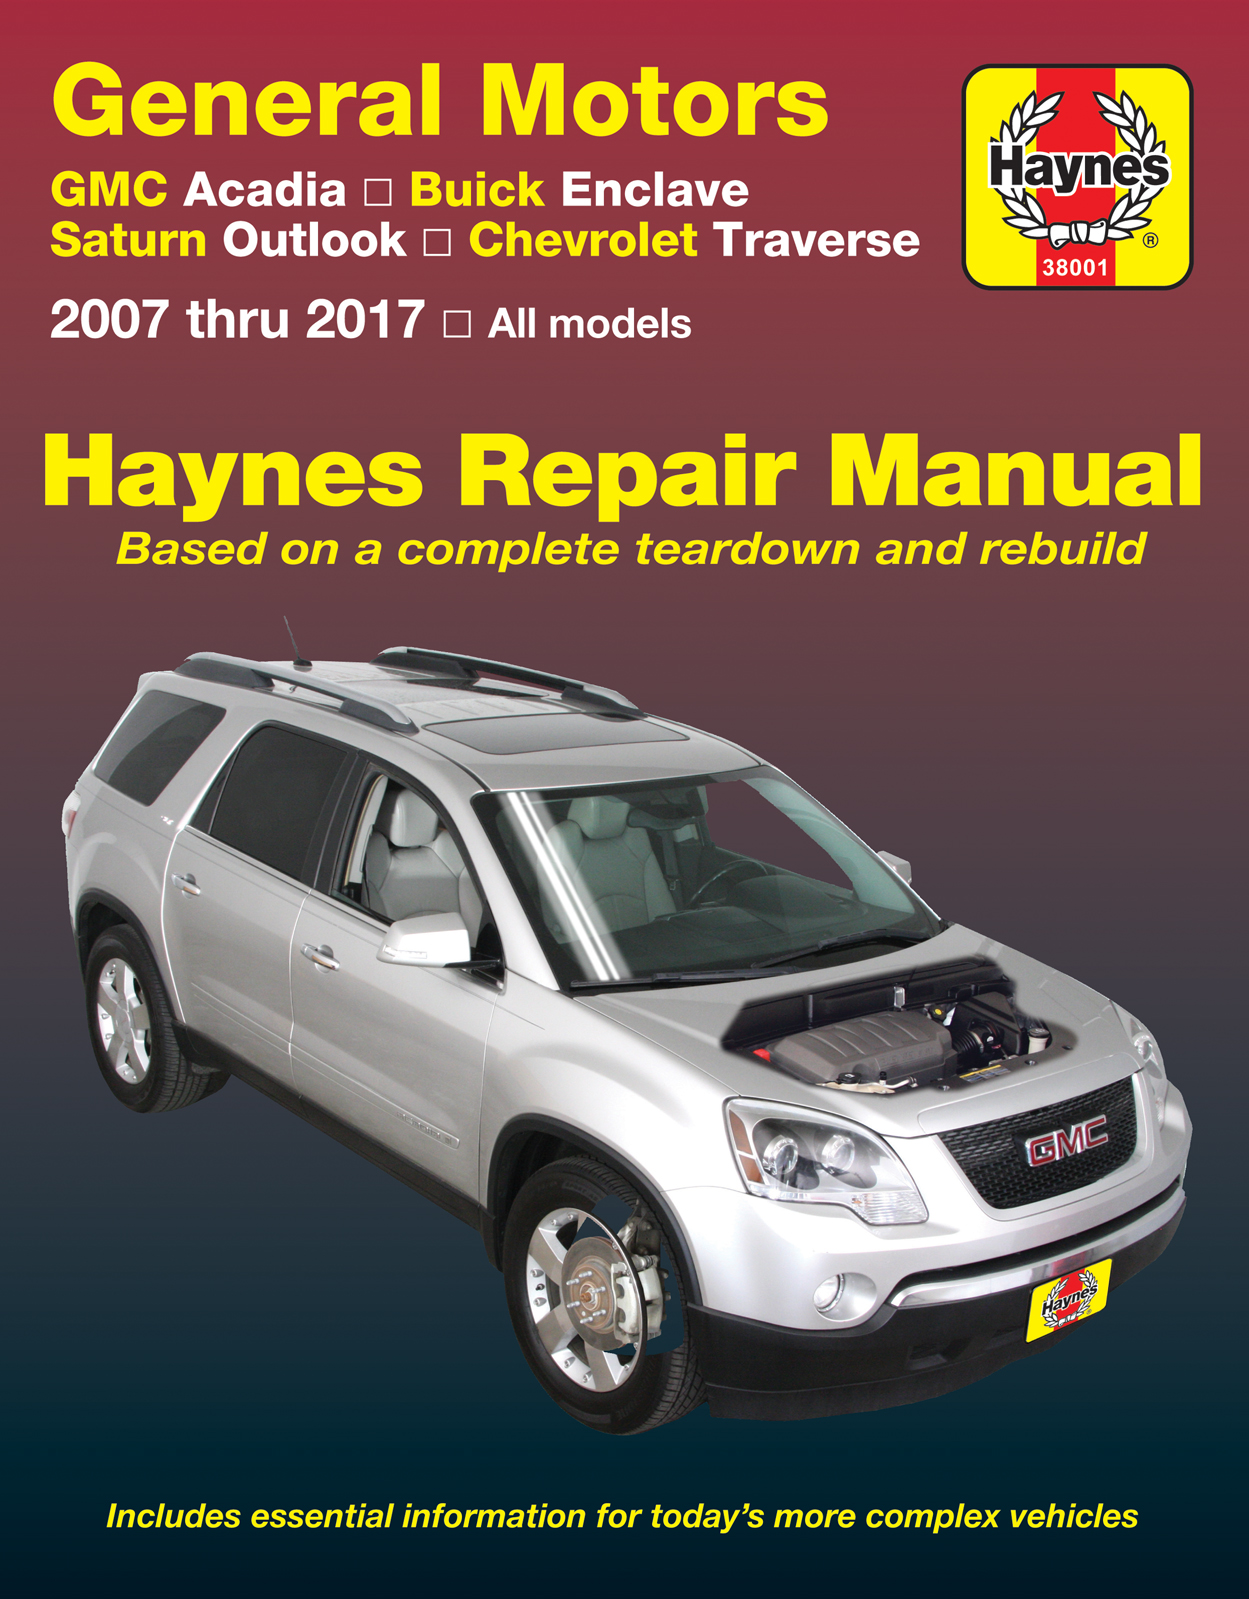 GMC Acadia, (07-16) & Acadia LTD (17), Buick Enclave, (08-17), Saturn Outlook, (07-10) & Chevrolet Traverse, (09-17) Haynes Repair Manual